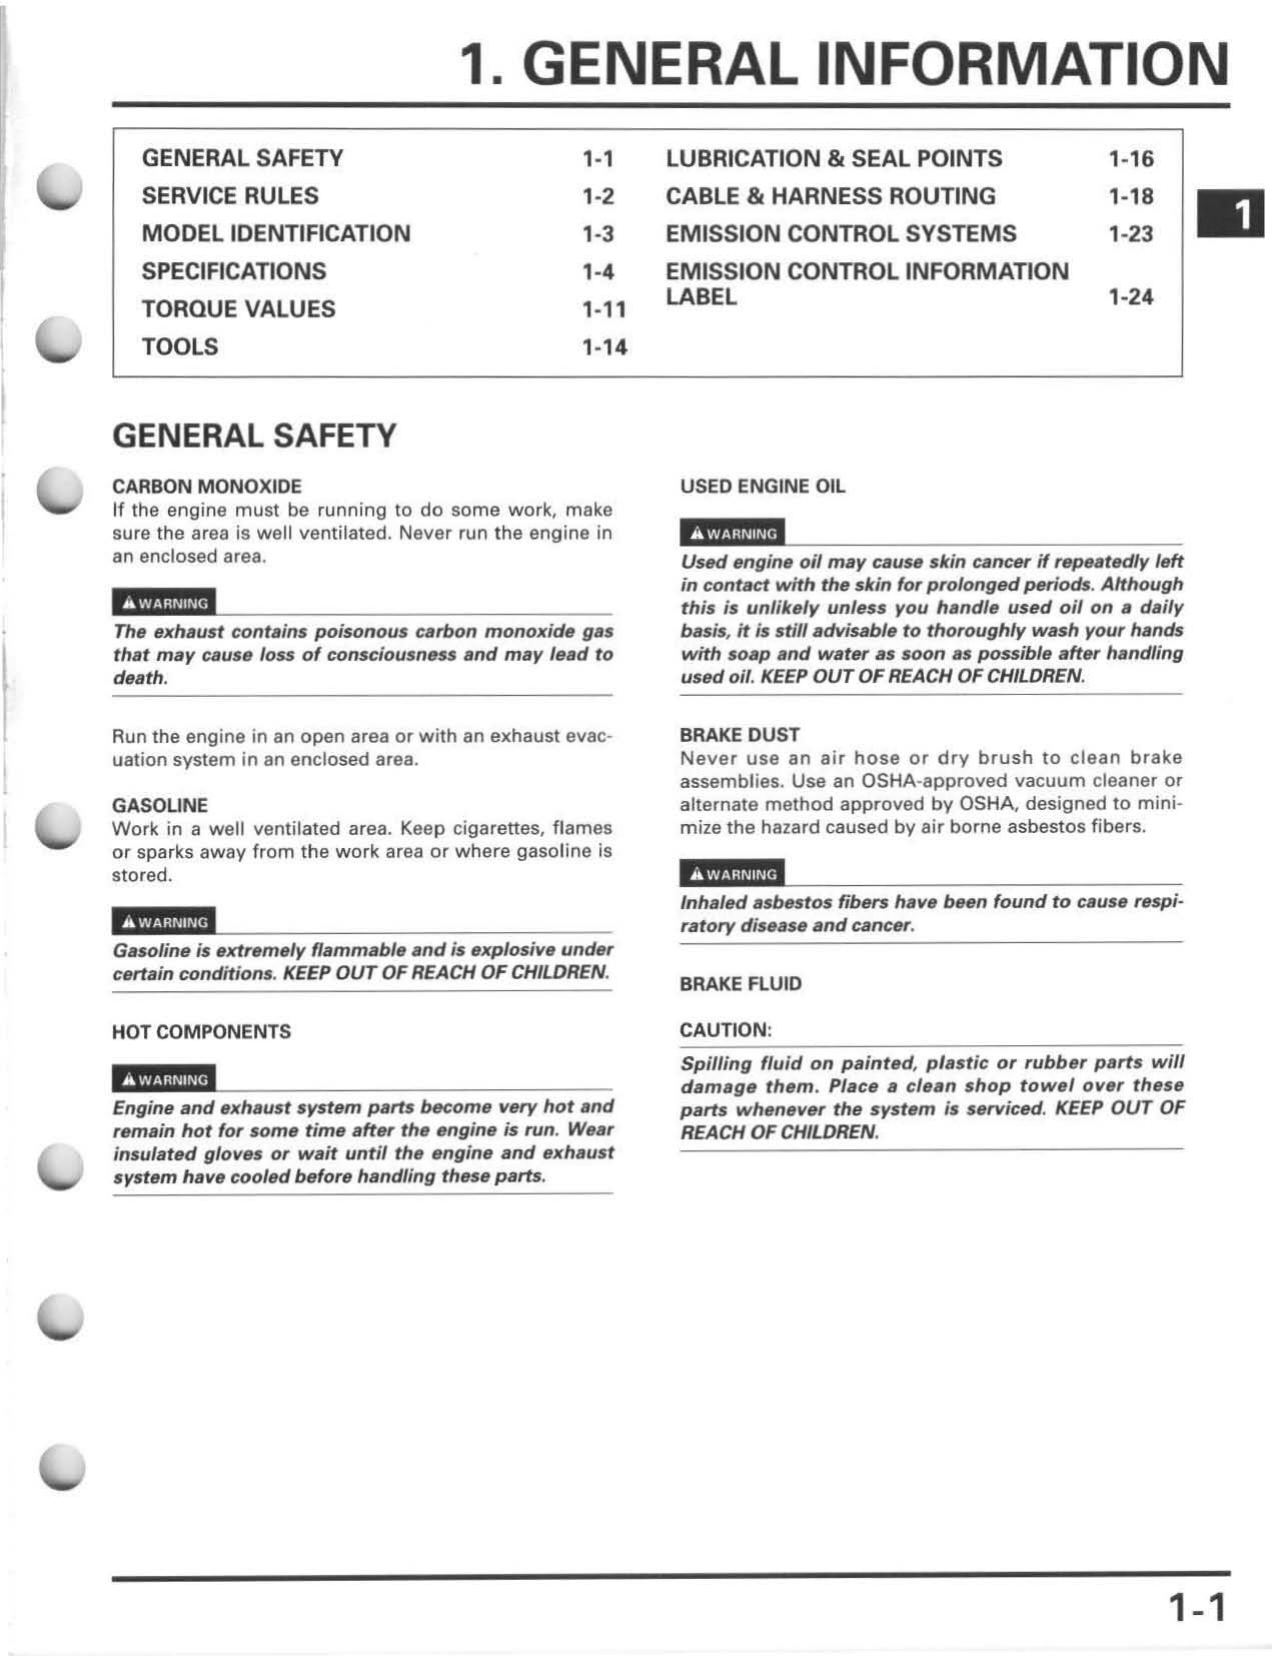 1999-2004 Honda TRX400ex service manual Preview image 5